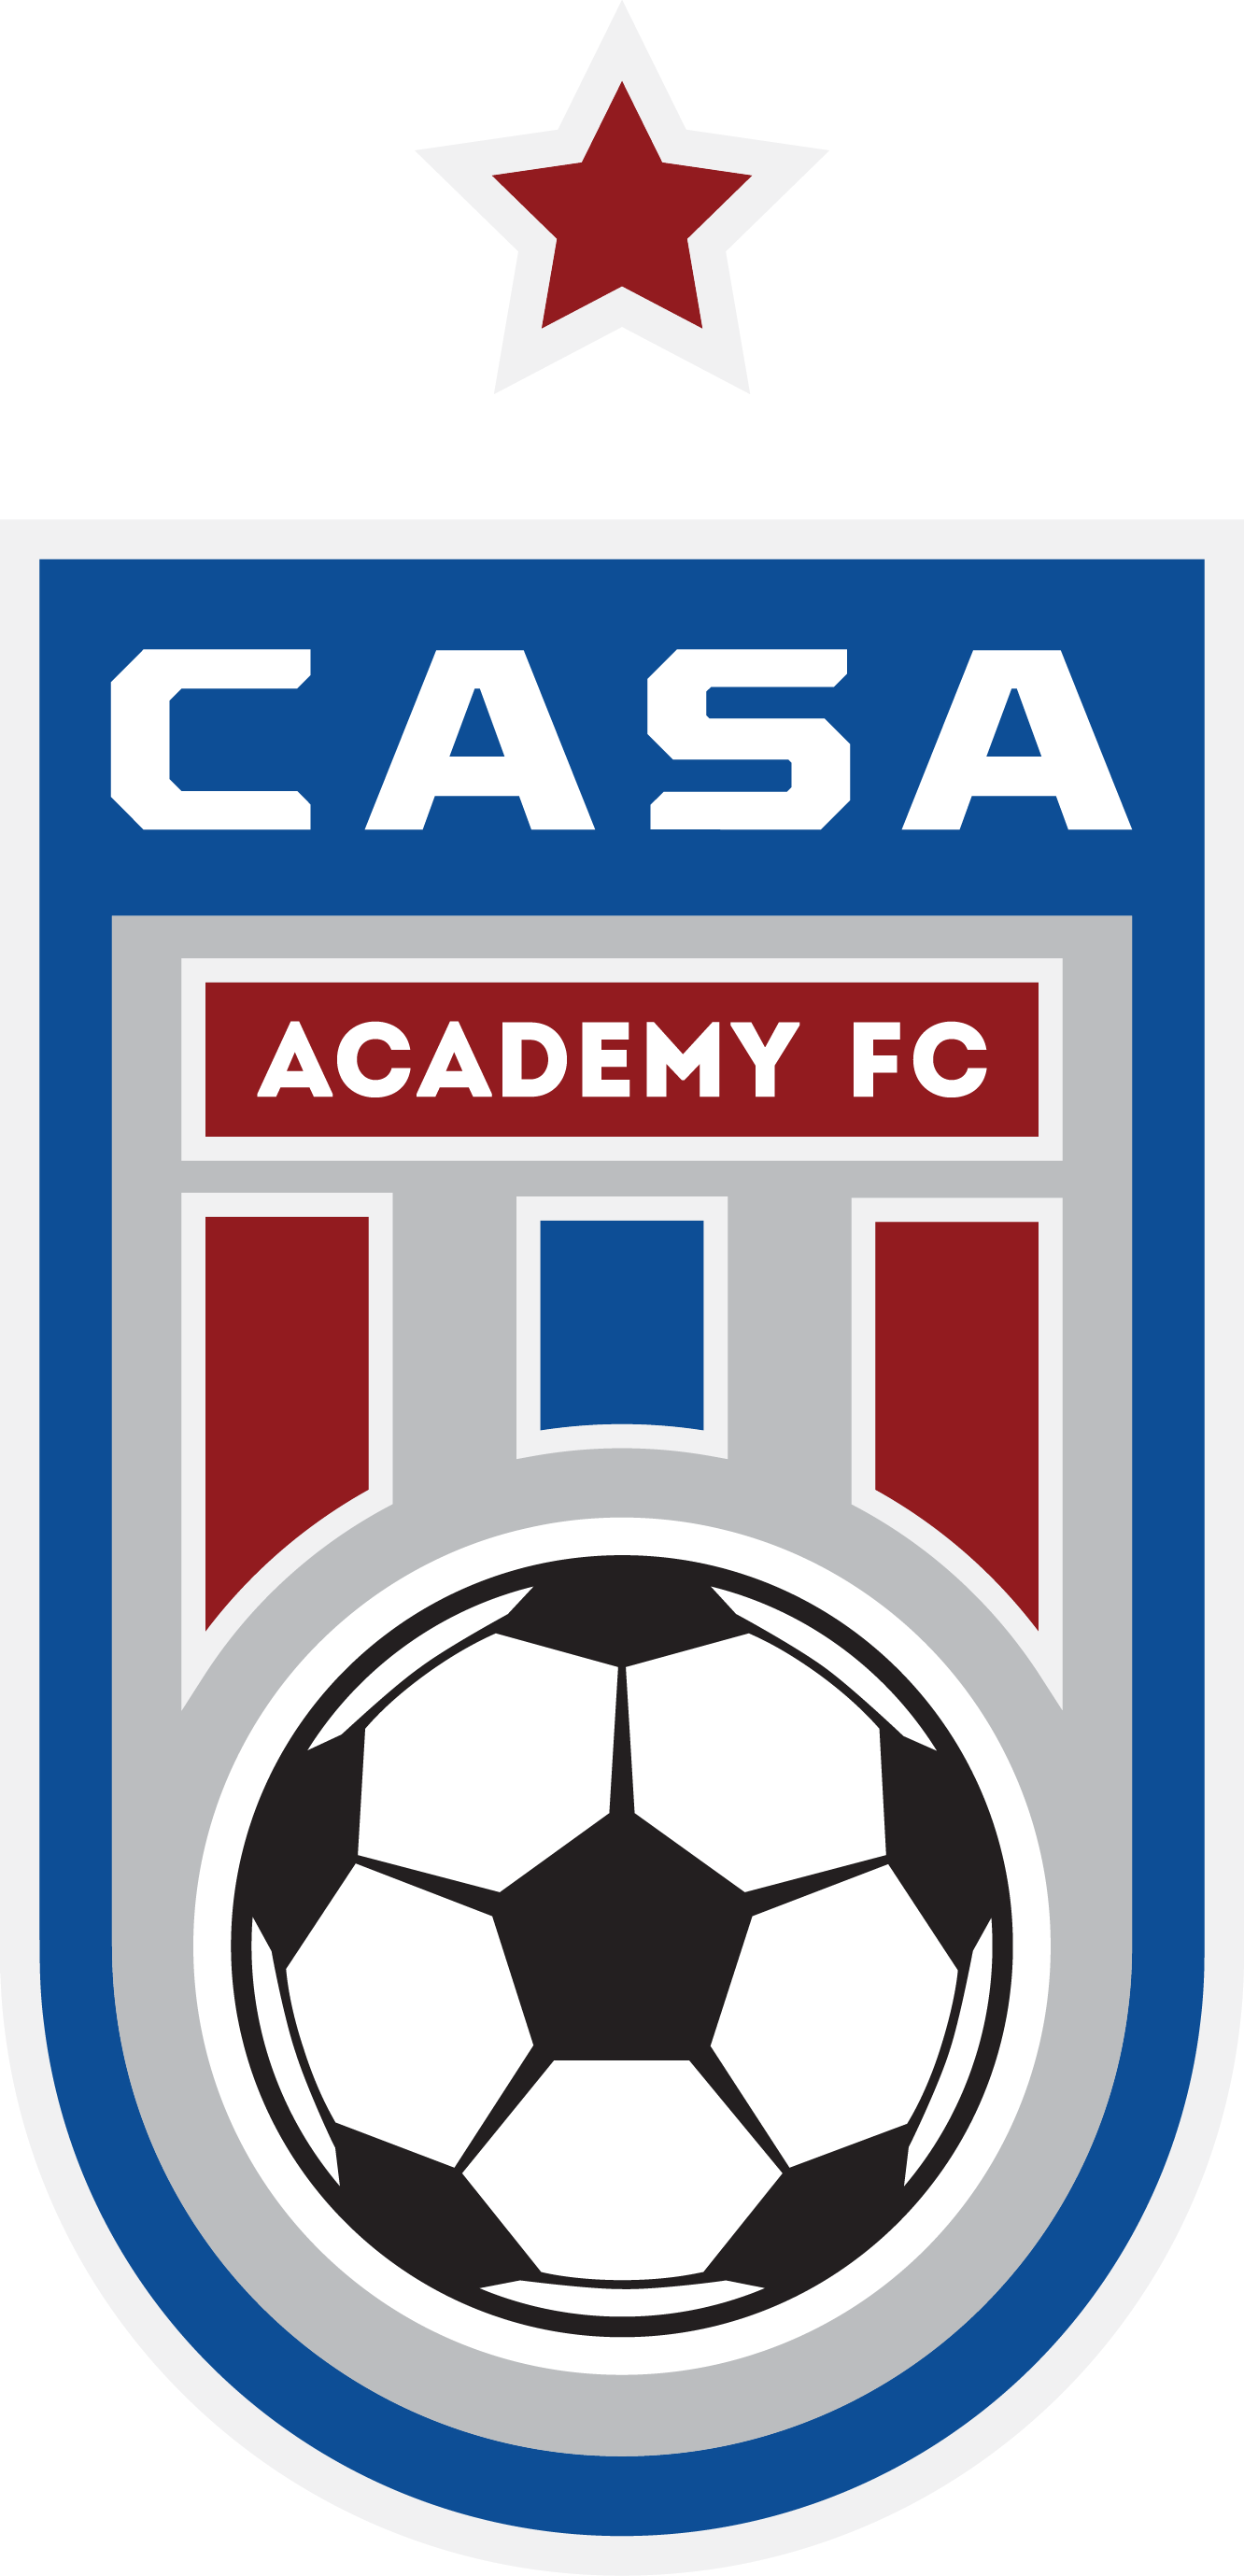 CASA team badge